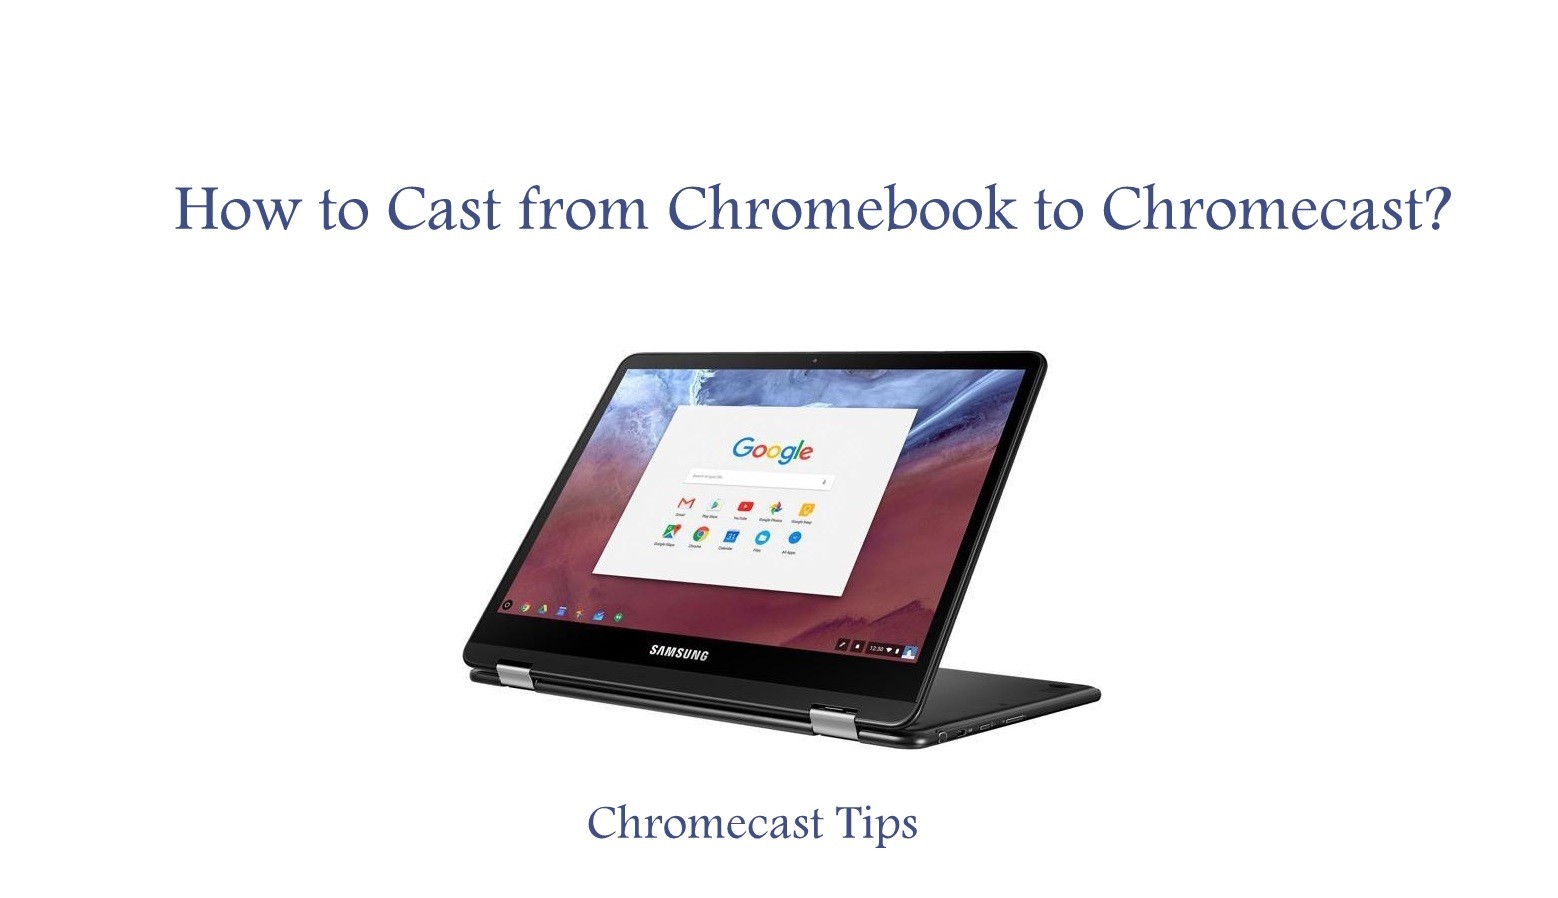 How to Cast from Chromebook to Chromecast